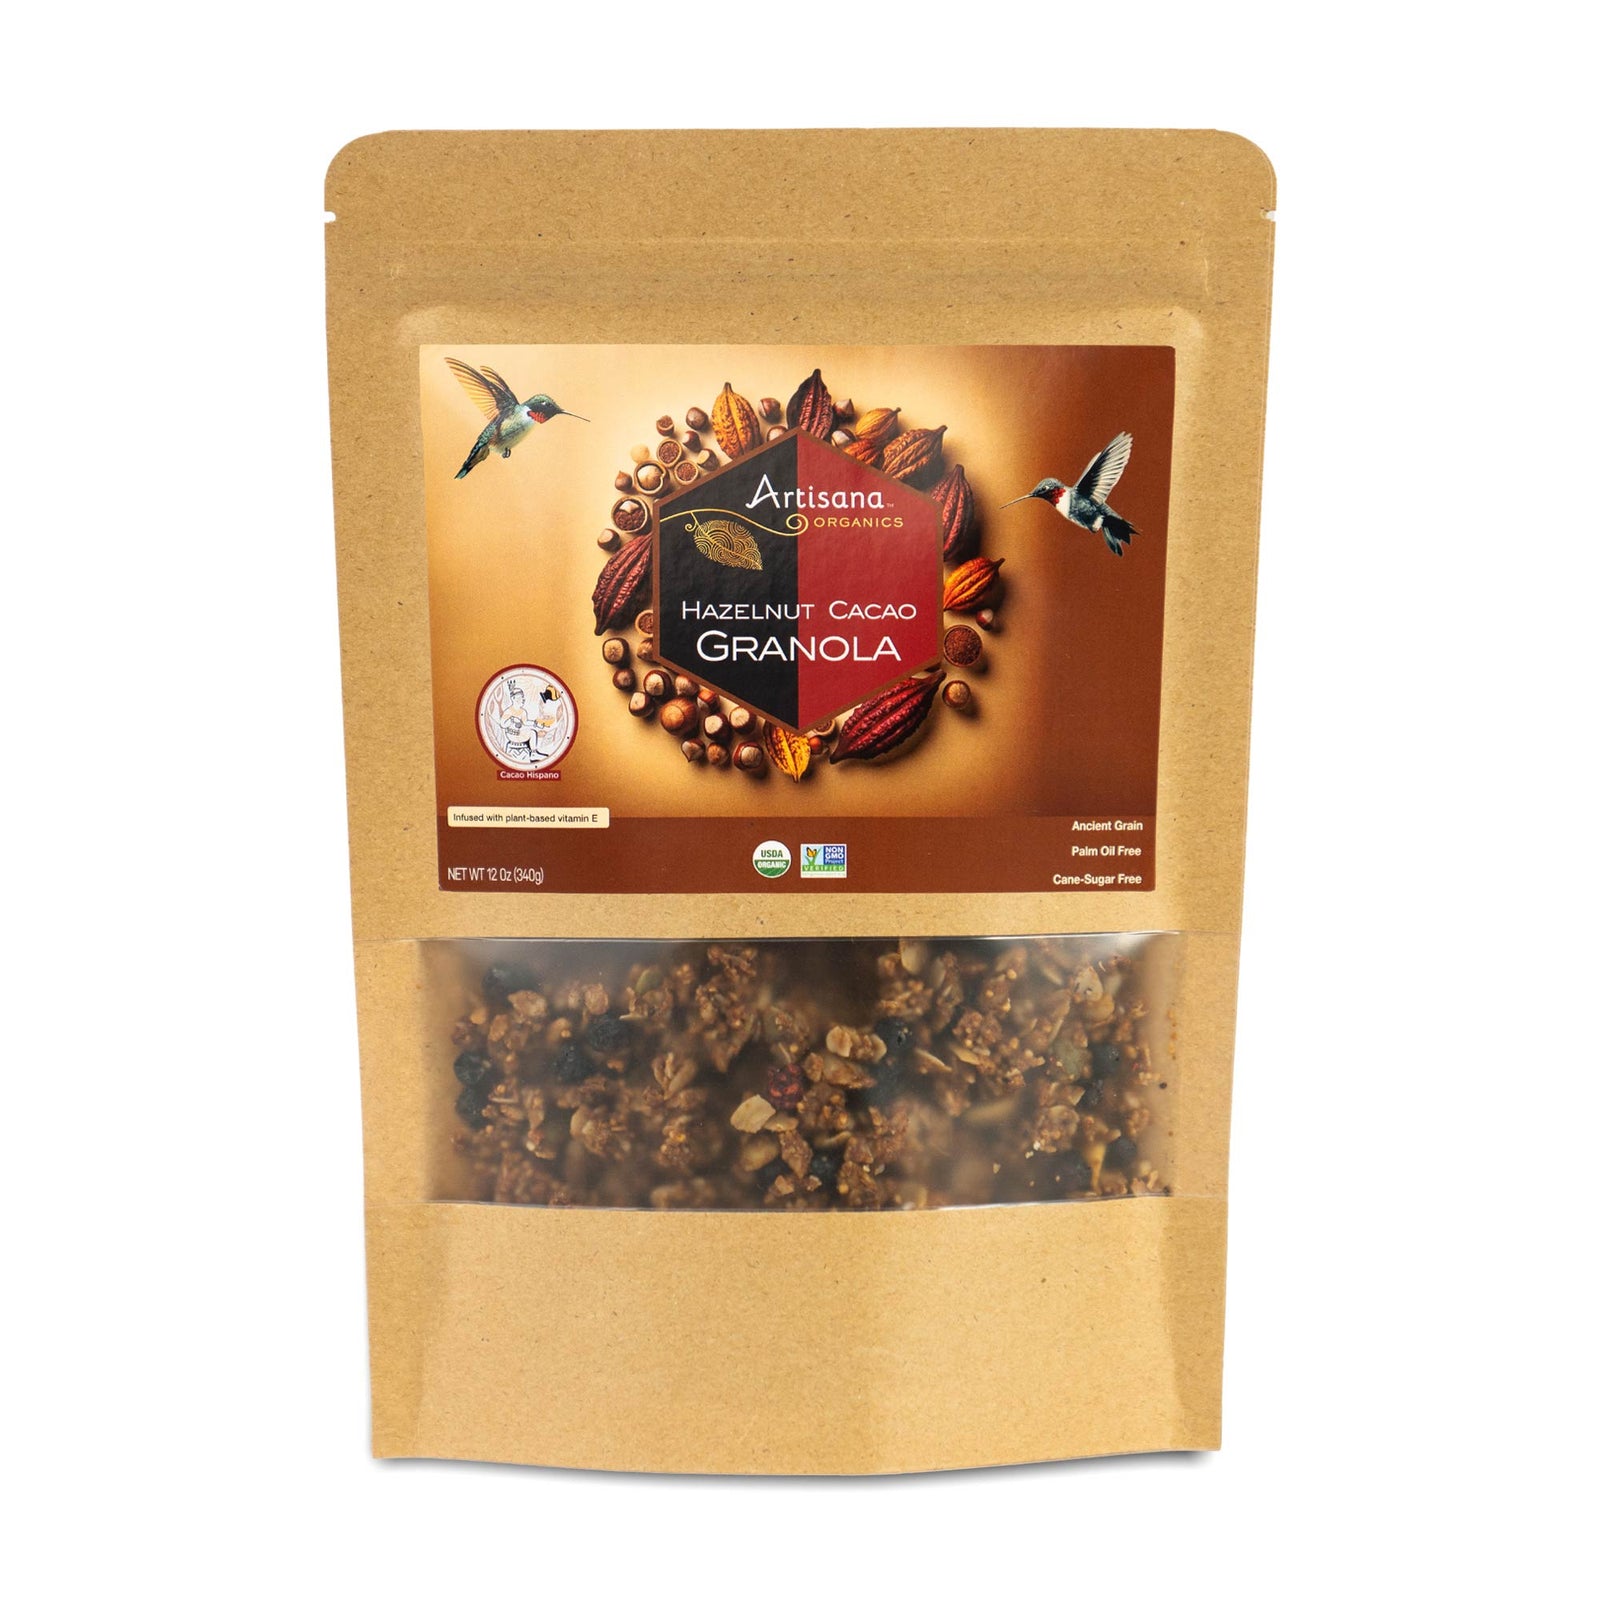 Artisana Organics Hazelnut Cacao Granola in a 12ox bag